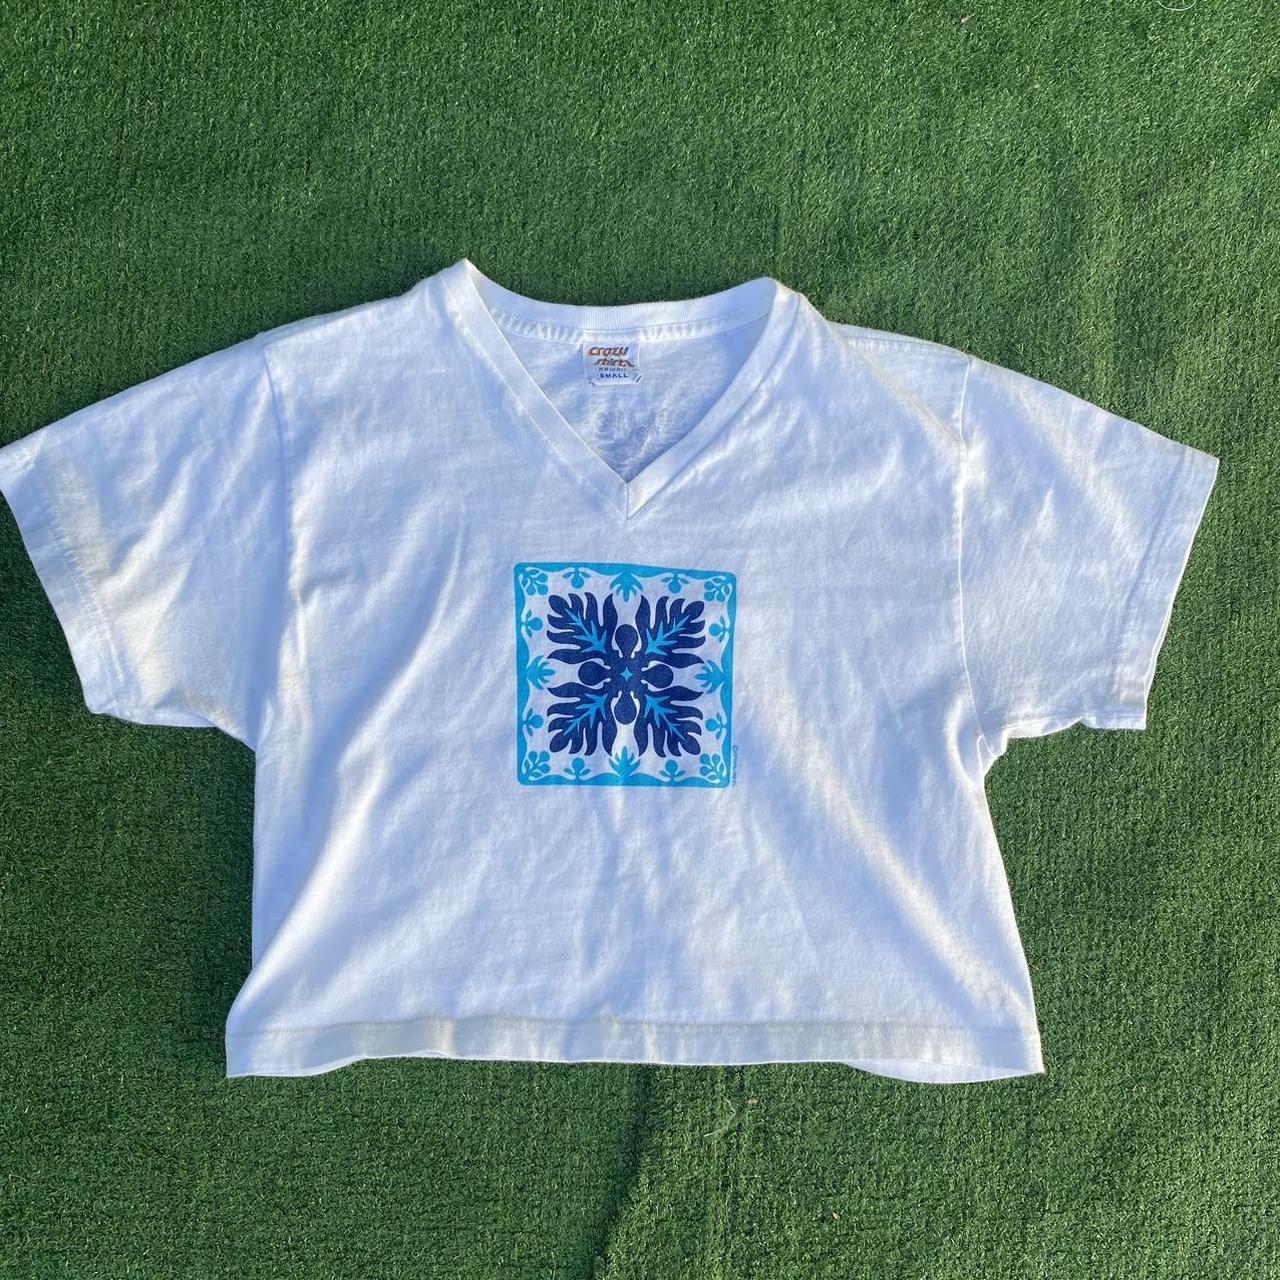 Crazy Shirts Women's White and Blue T-shirt | Depop